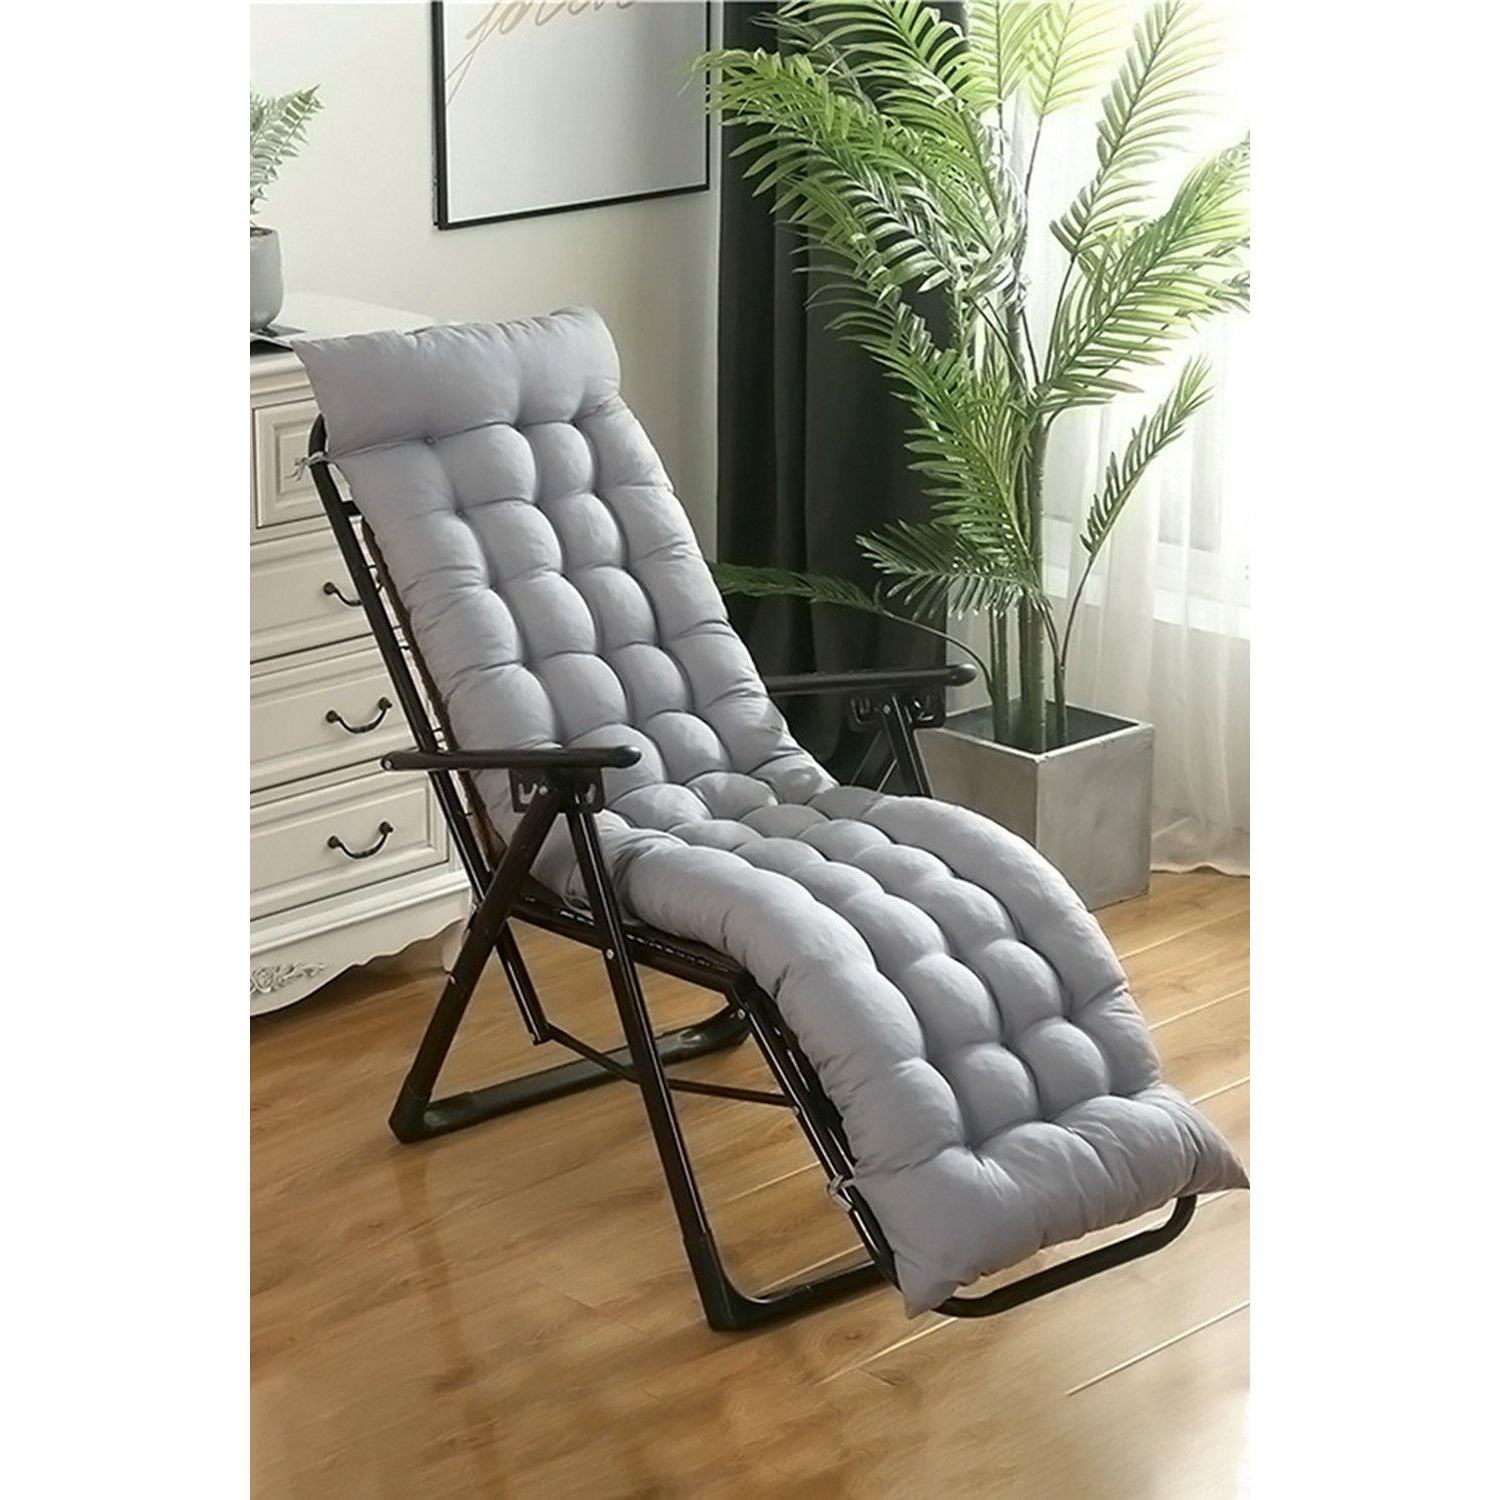 160cm W x 50cm D Grey Garden Lounger Seat Cushion - image 1